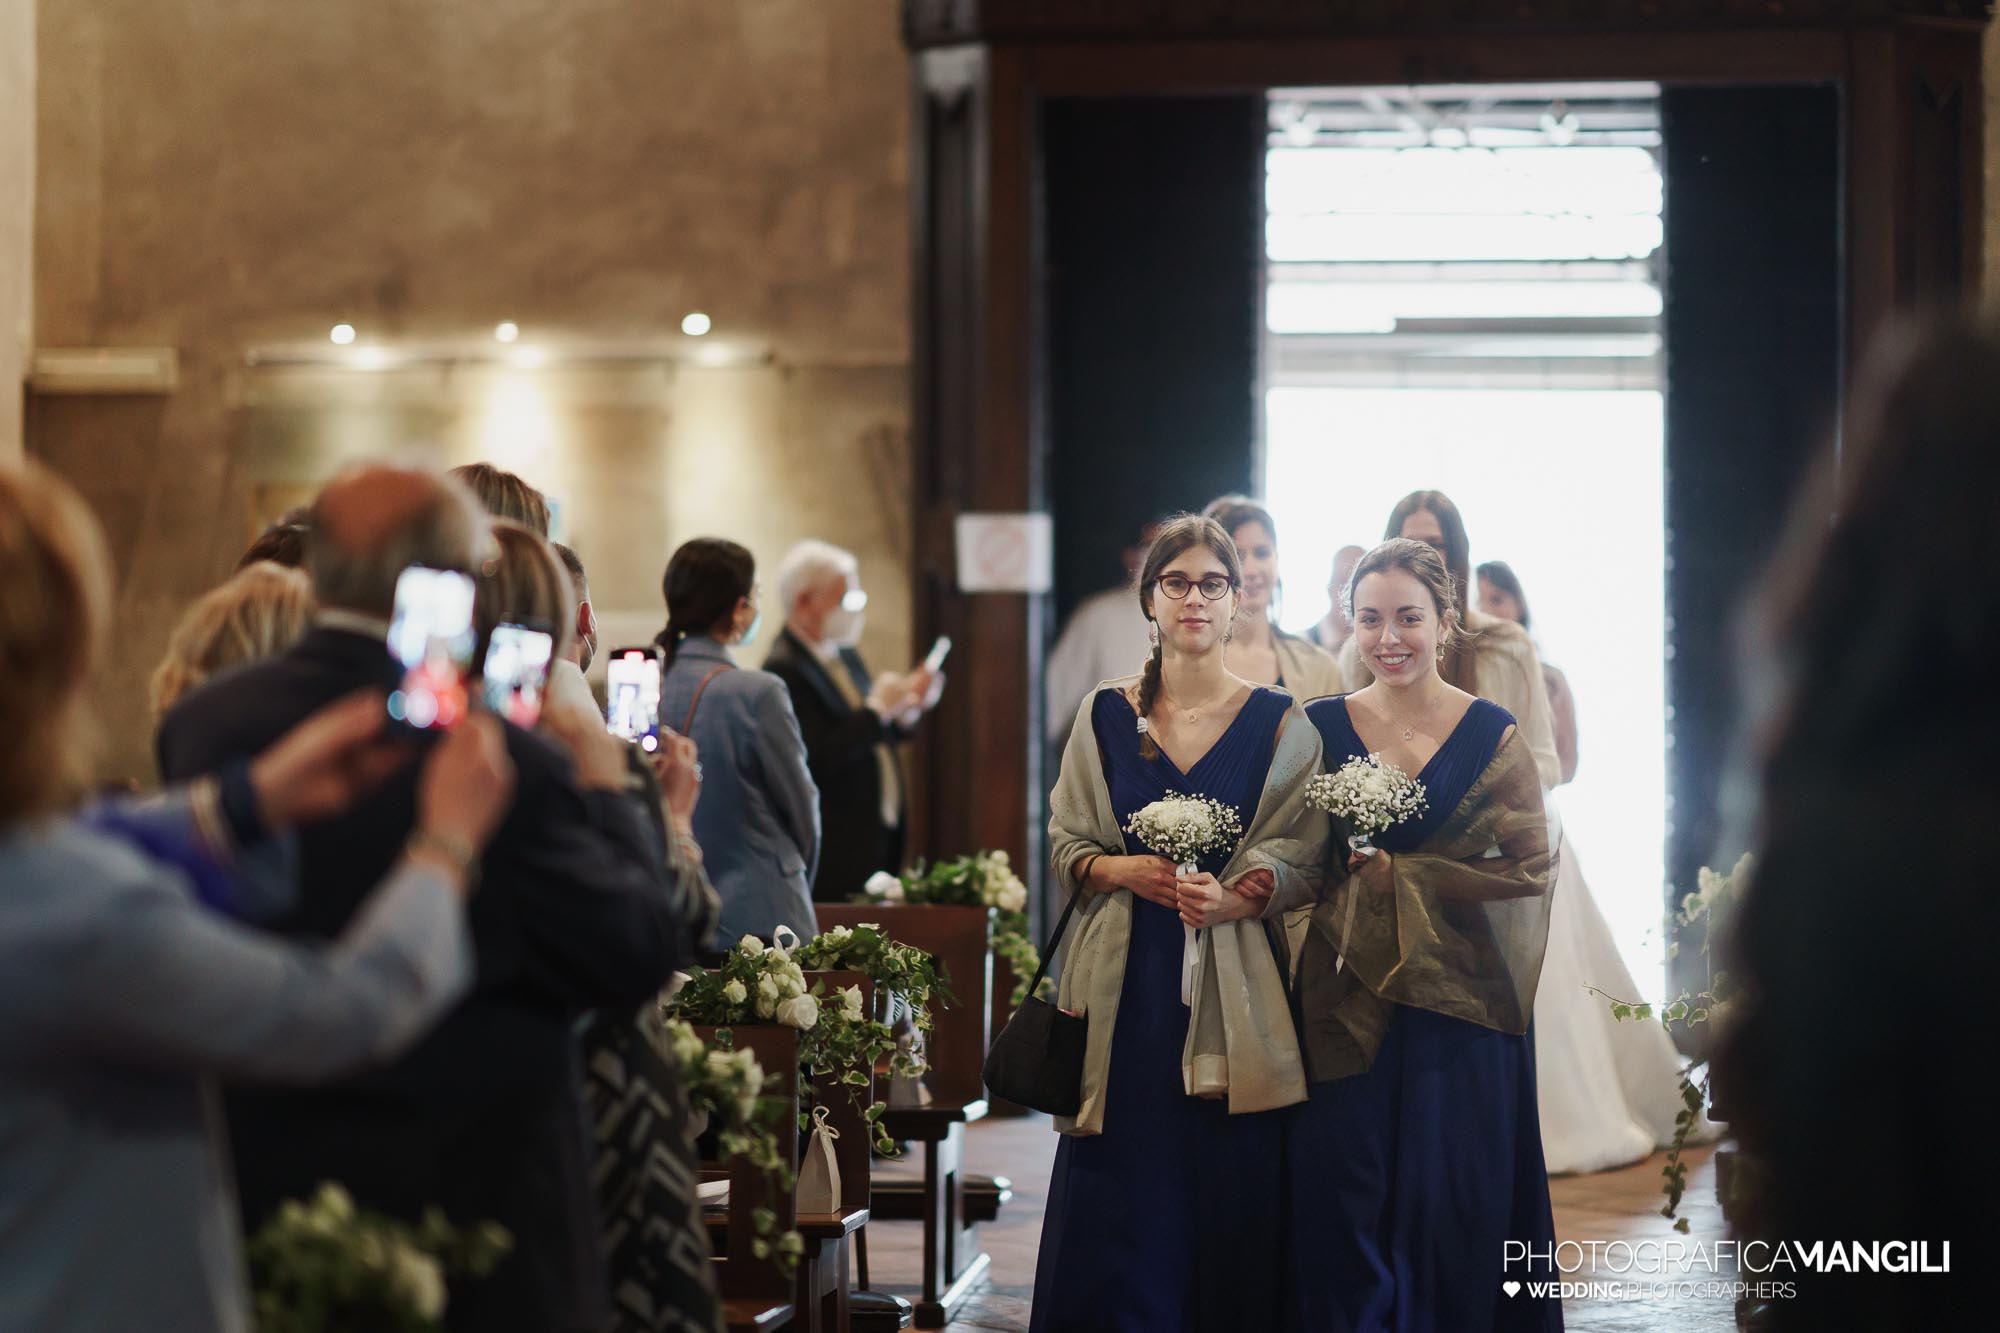 026 foto nozze wedding reportage ingresso sposa damigelle rito religioso chiesa milano chiara oliviero